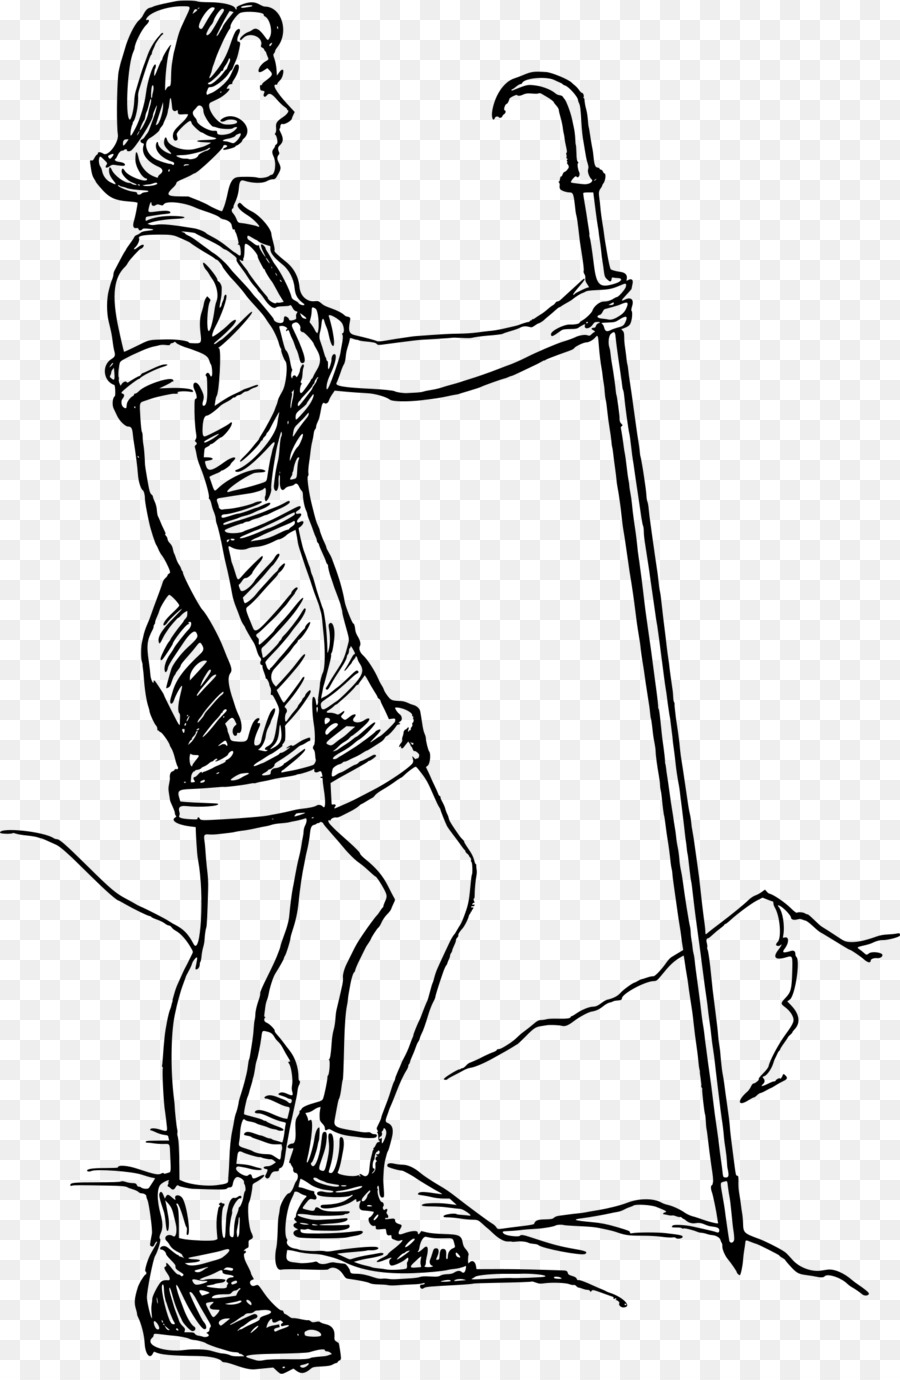 Hiking Drawing Woman Clip art - hiking png download - 1572*2400 - Free